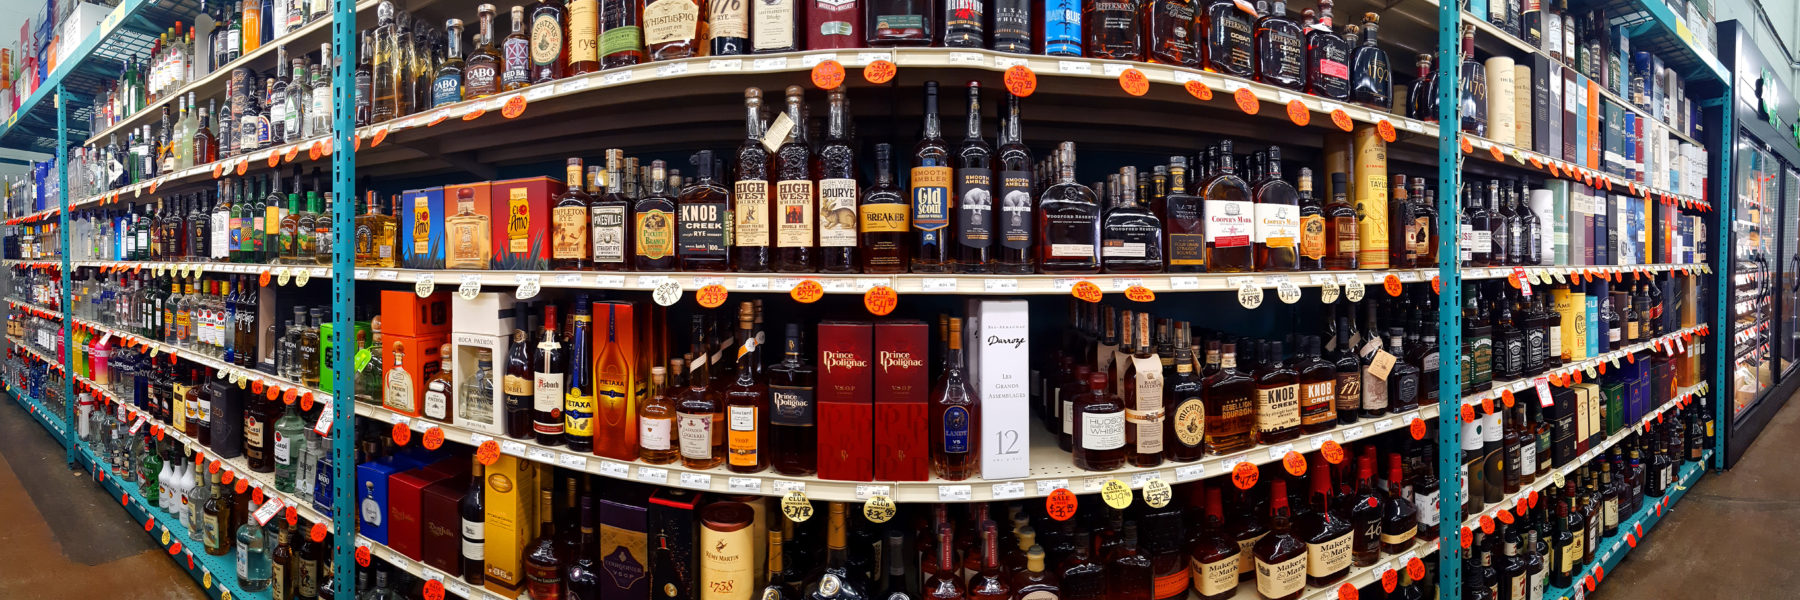 alcohol retail shelf massive bottles price tax